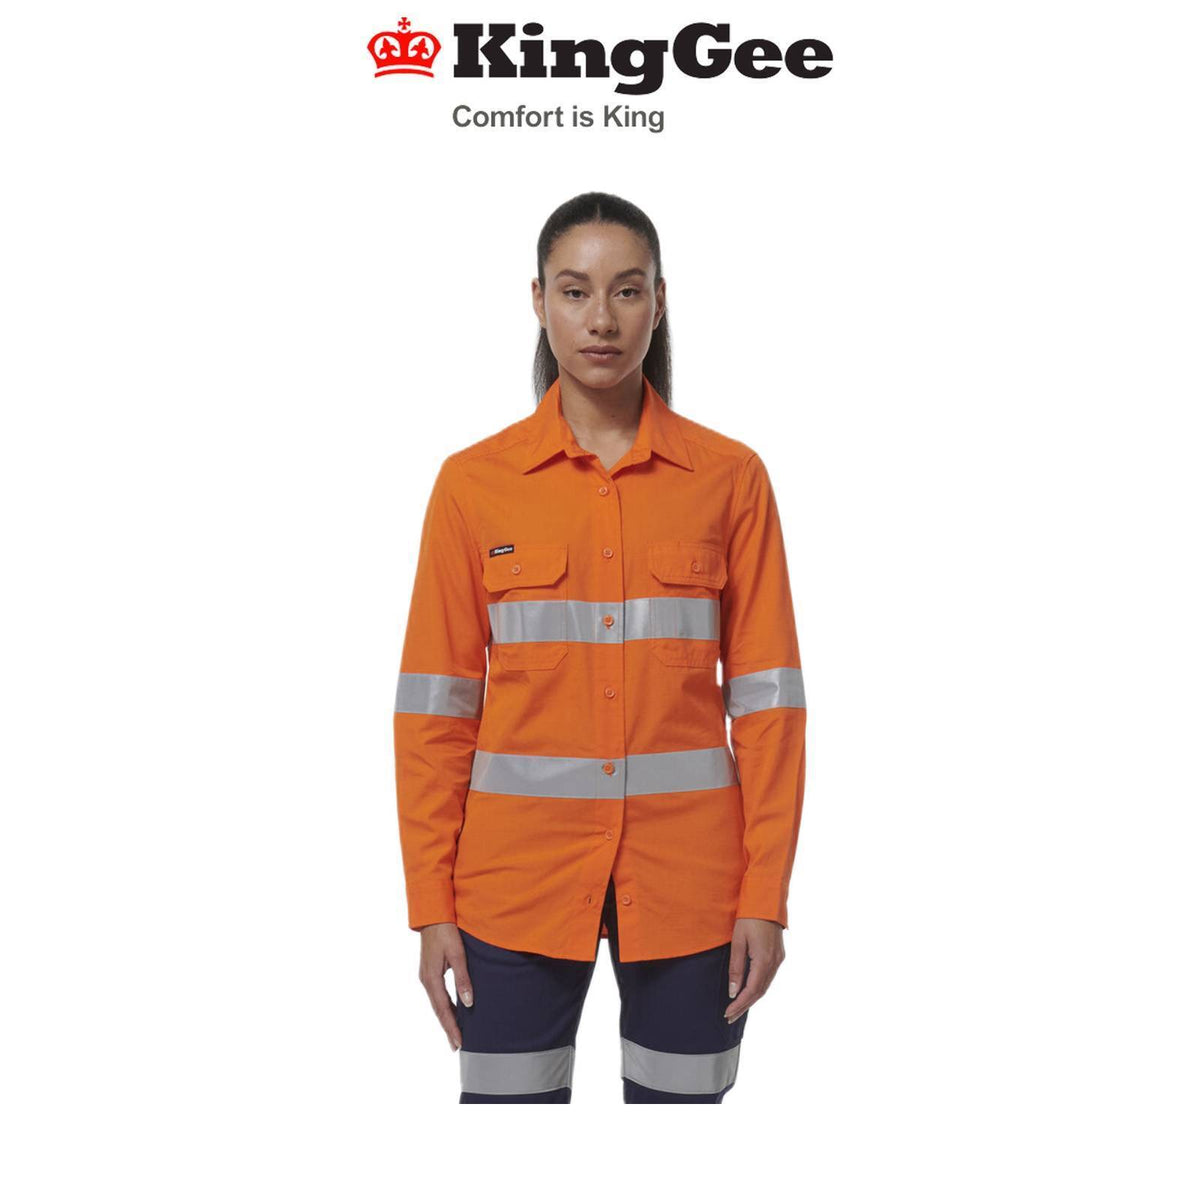 KingGee Womens Workcool Vented Reflective Shirt K44231